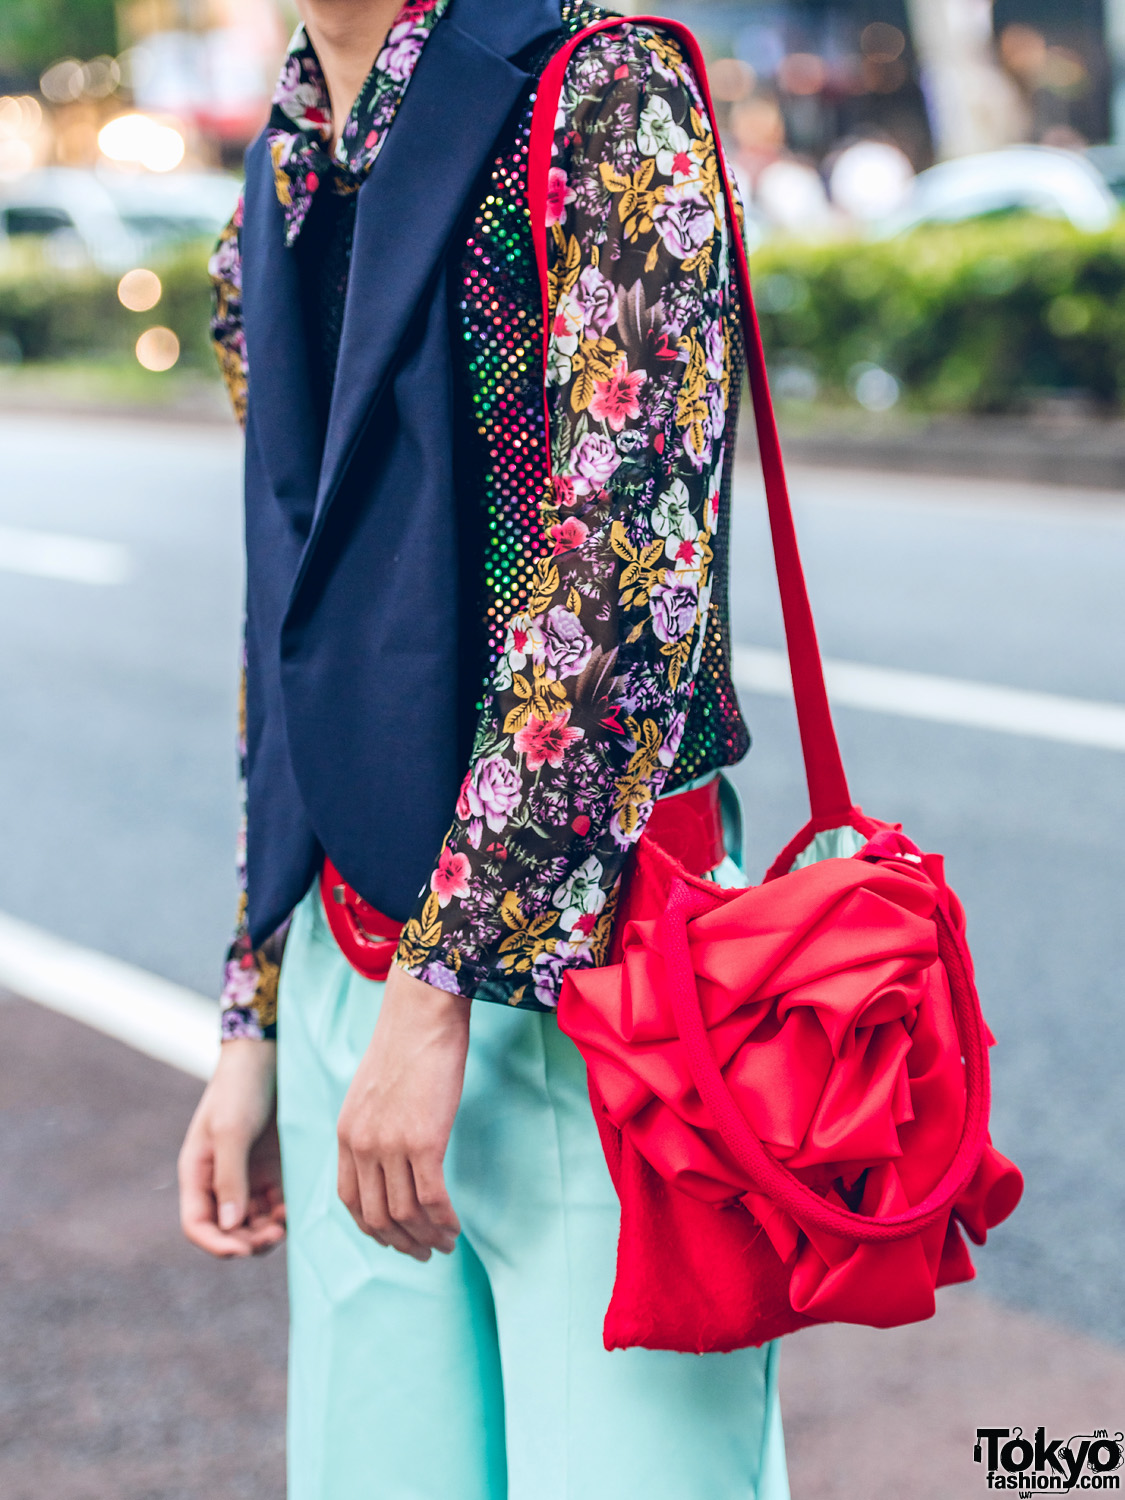 Japanese Eclectic Street Style w/ Floral Print Shirt, Shin Mesh Blazer 